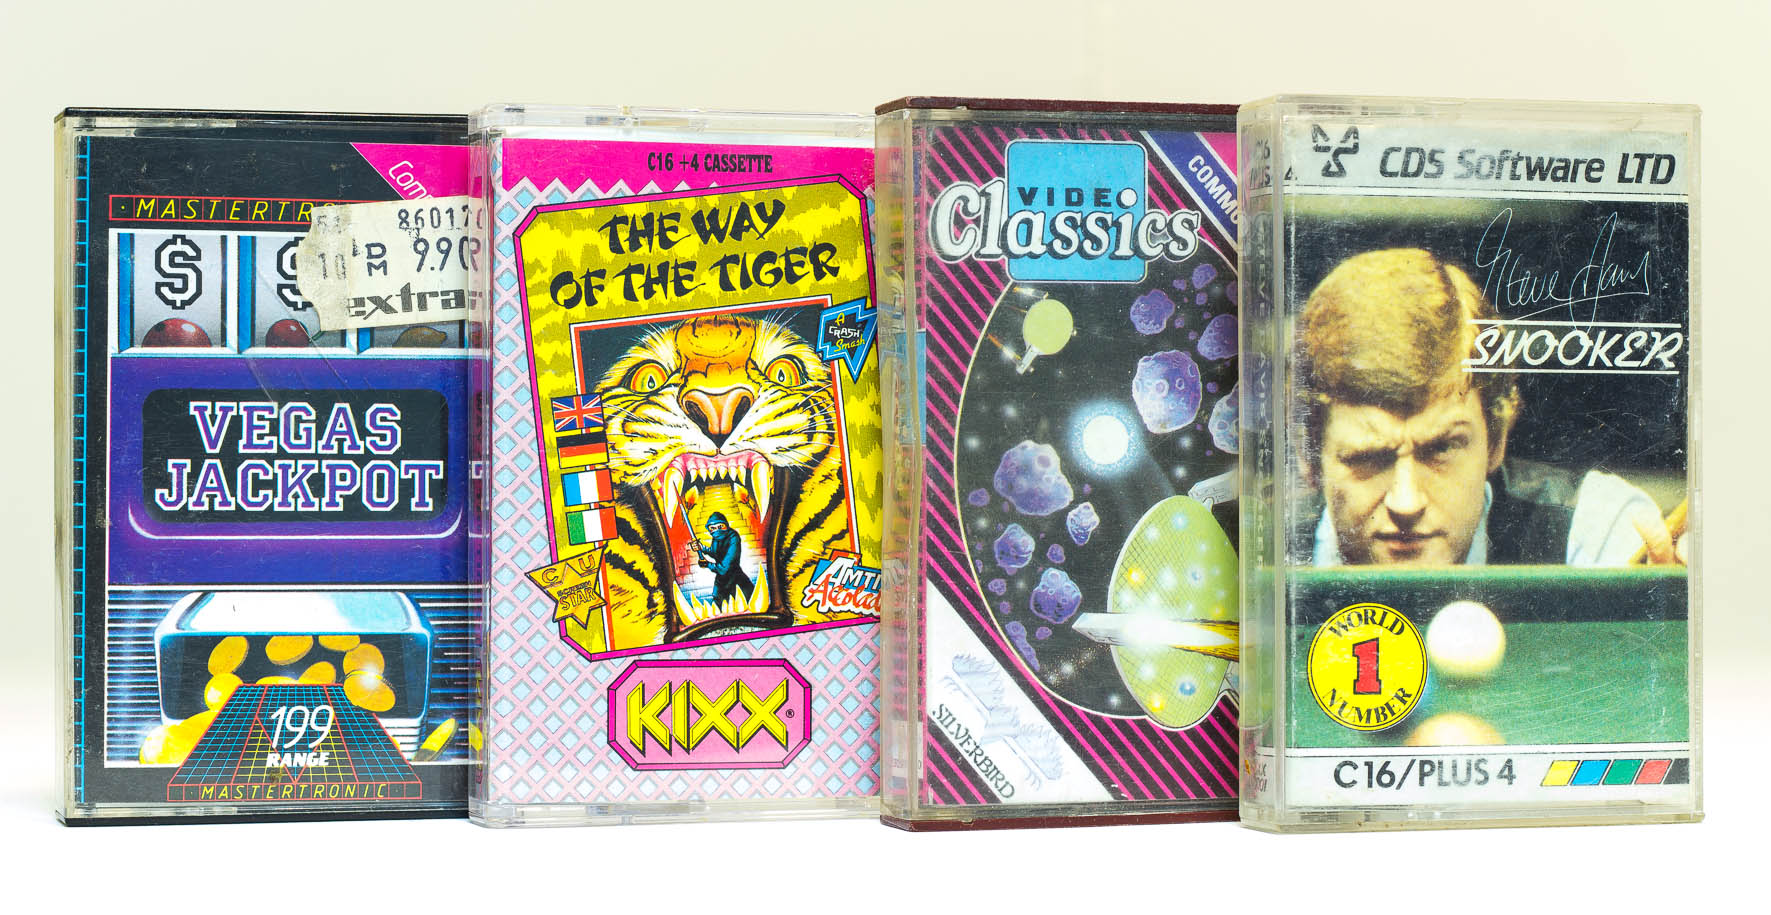 C16 Spielkassetten: Vegas Jackpot, The Way Of The Tiger, Video Classics und Snooker. (Bild: Claudio Lione)